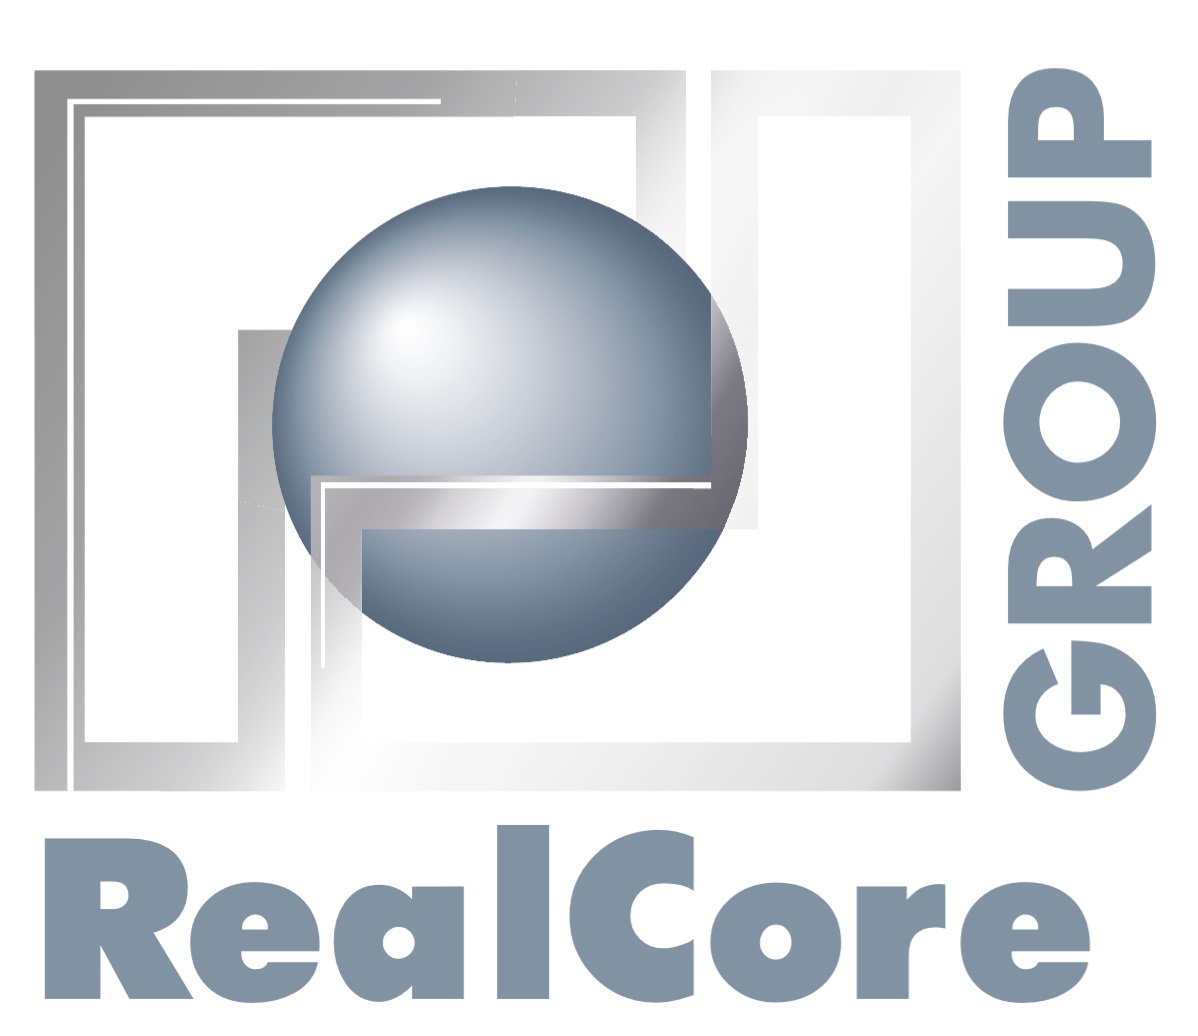 Realcore Group GmbH